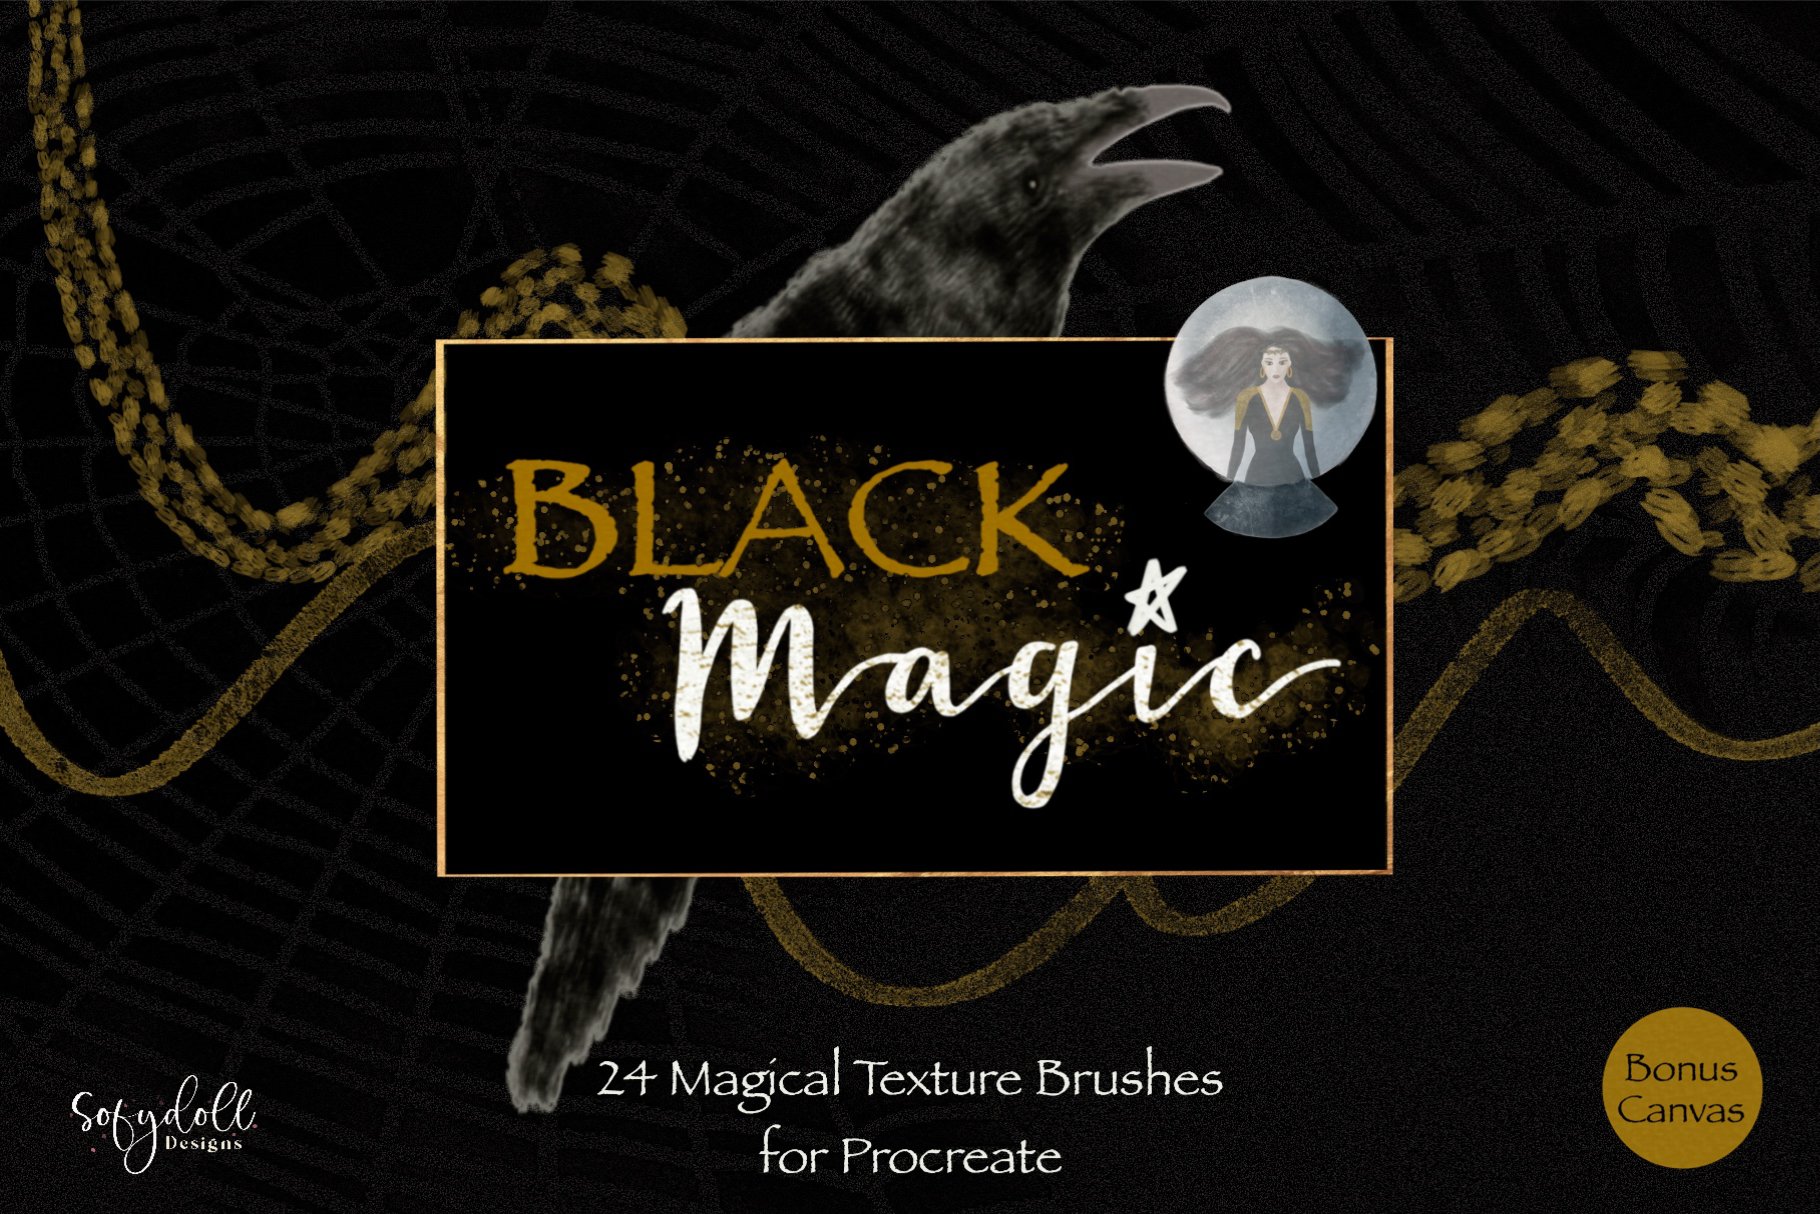 Black Magic - Texture Brushes for Procreate